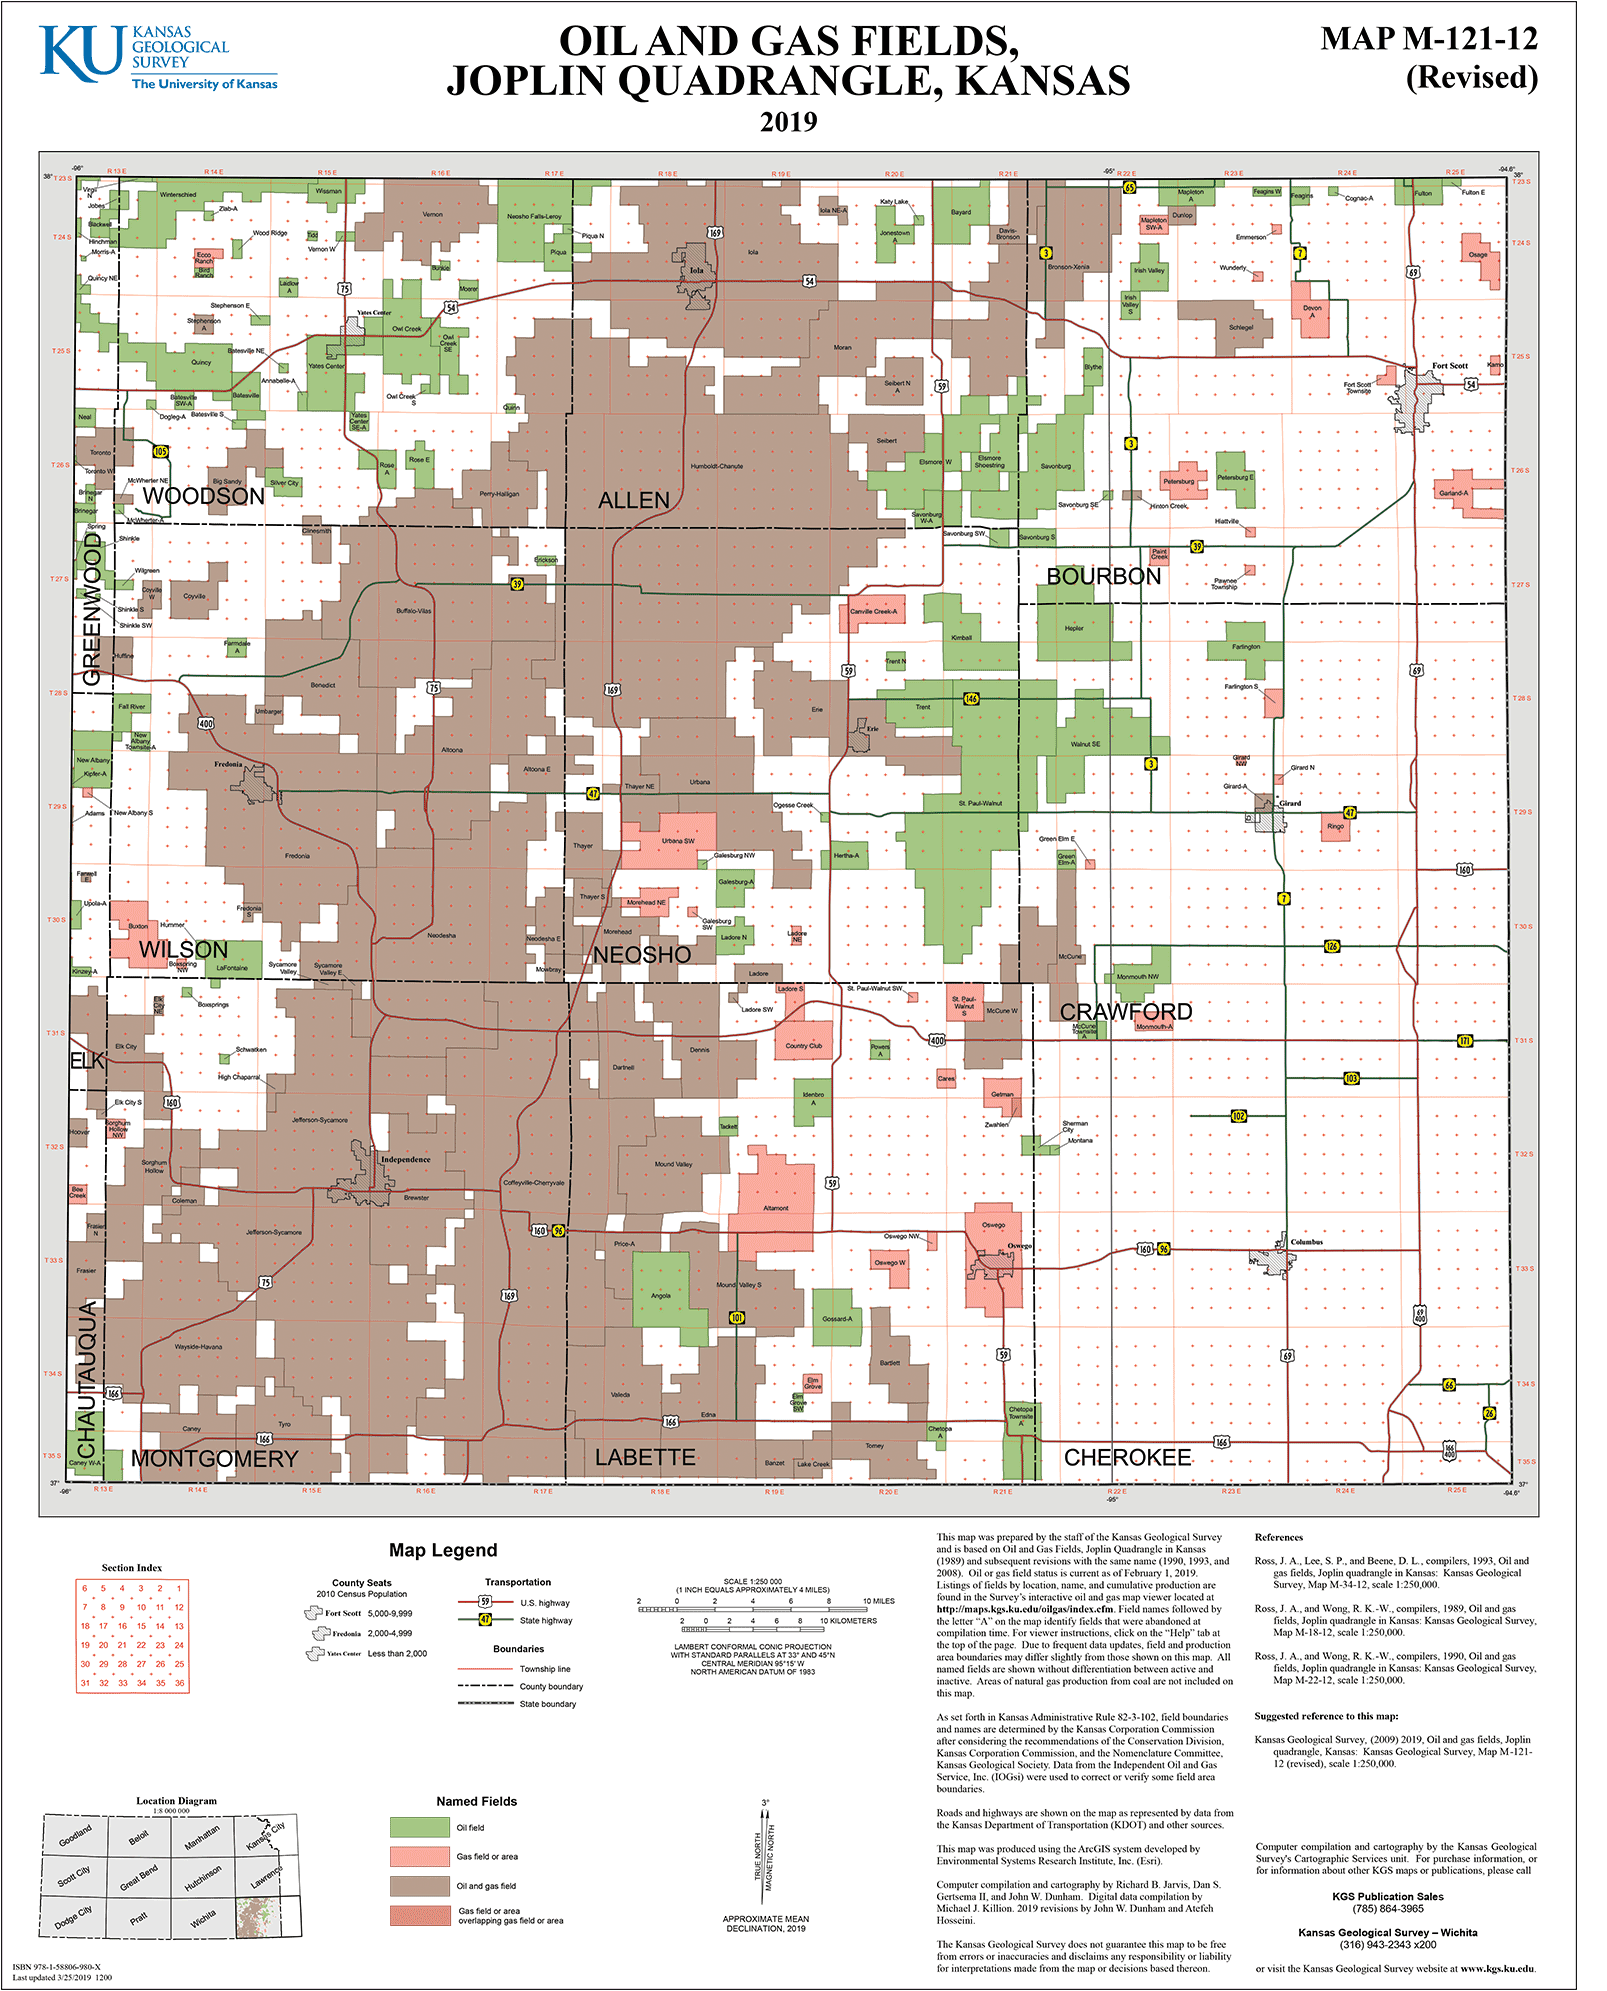 Joplin quadrangle oil and gas fields